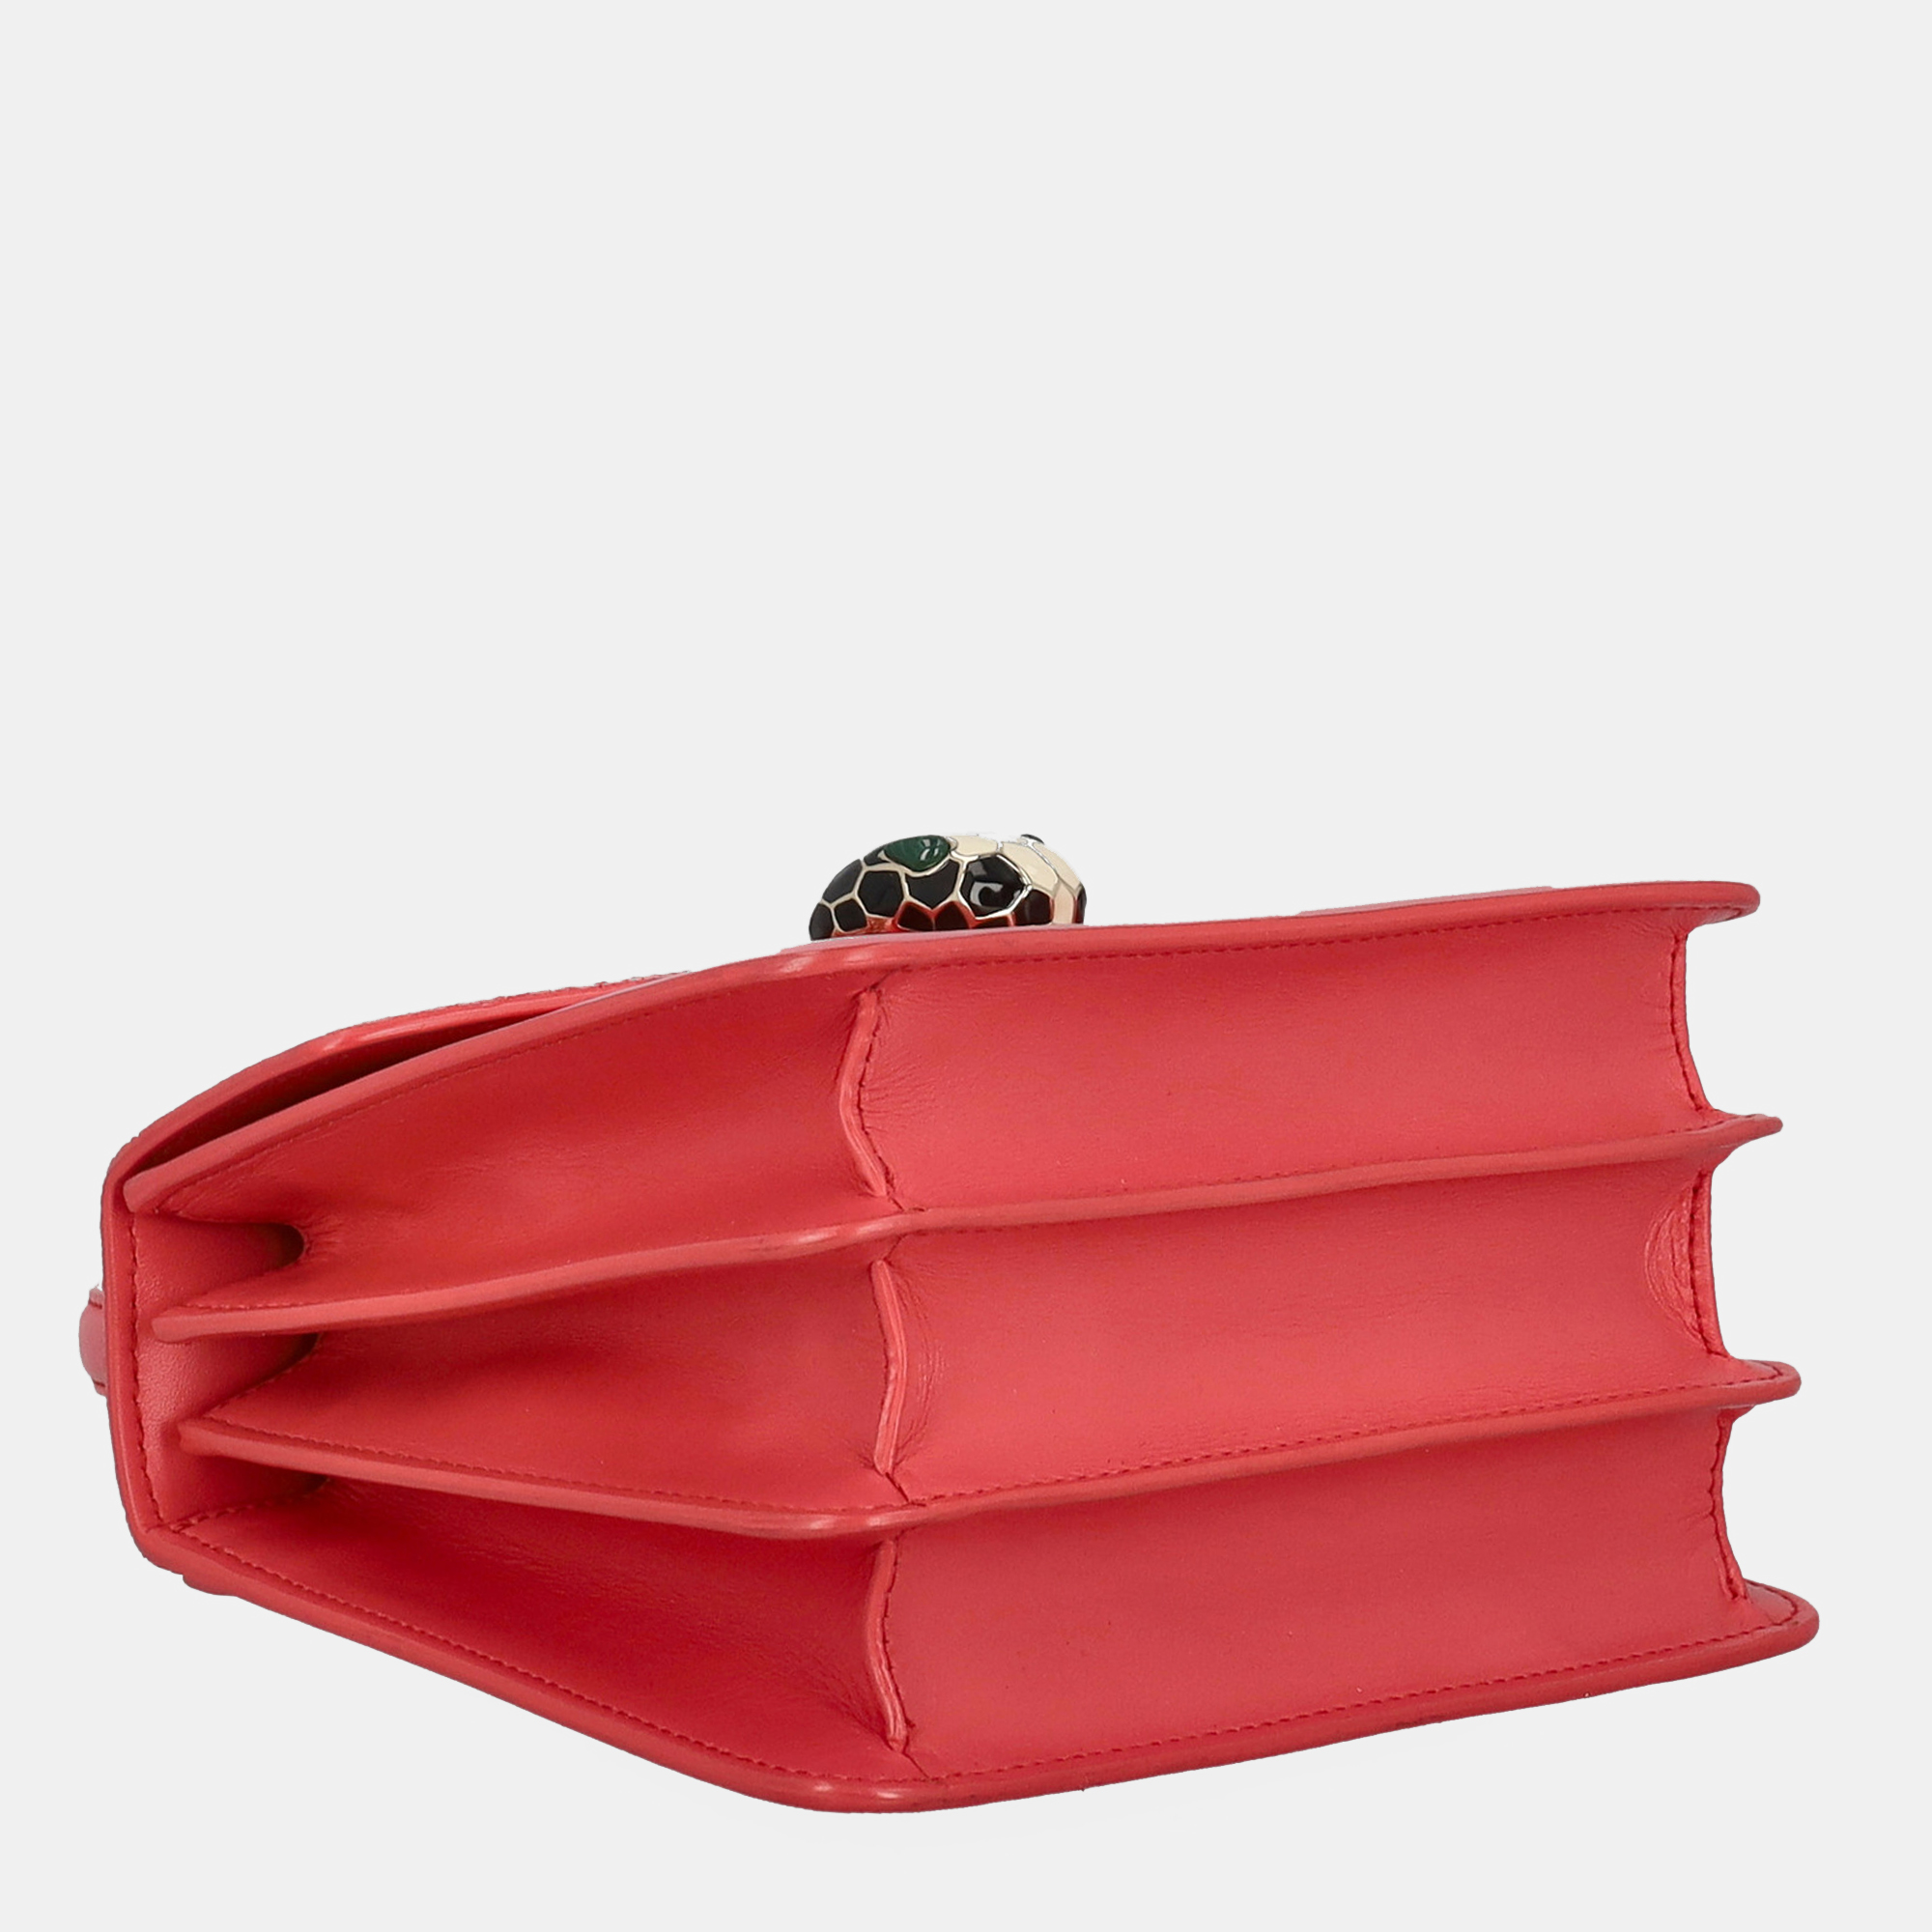 Bvlgari Serpenti -  Women's Leather Handbag - Pink - One Size